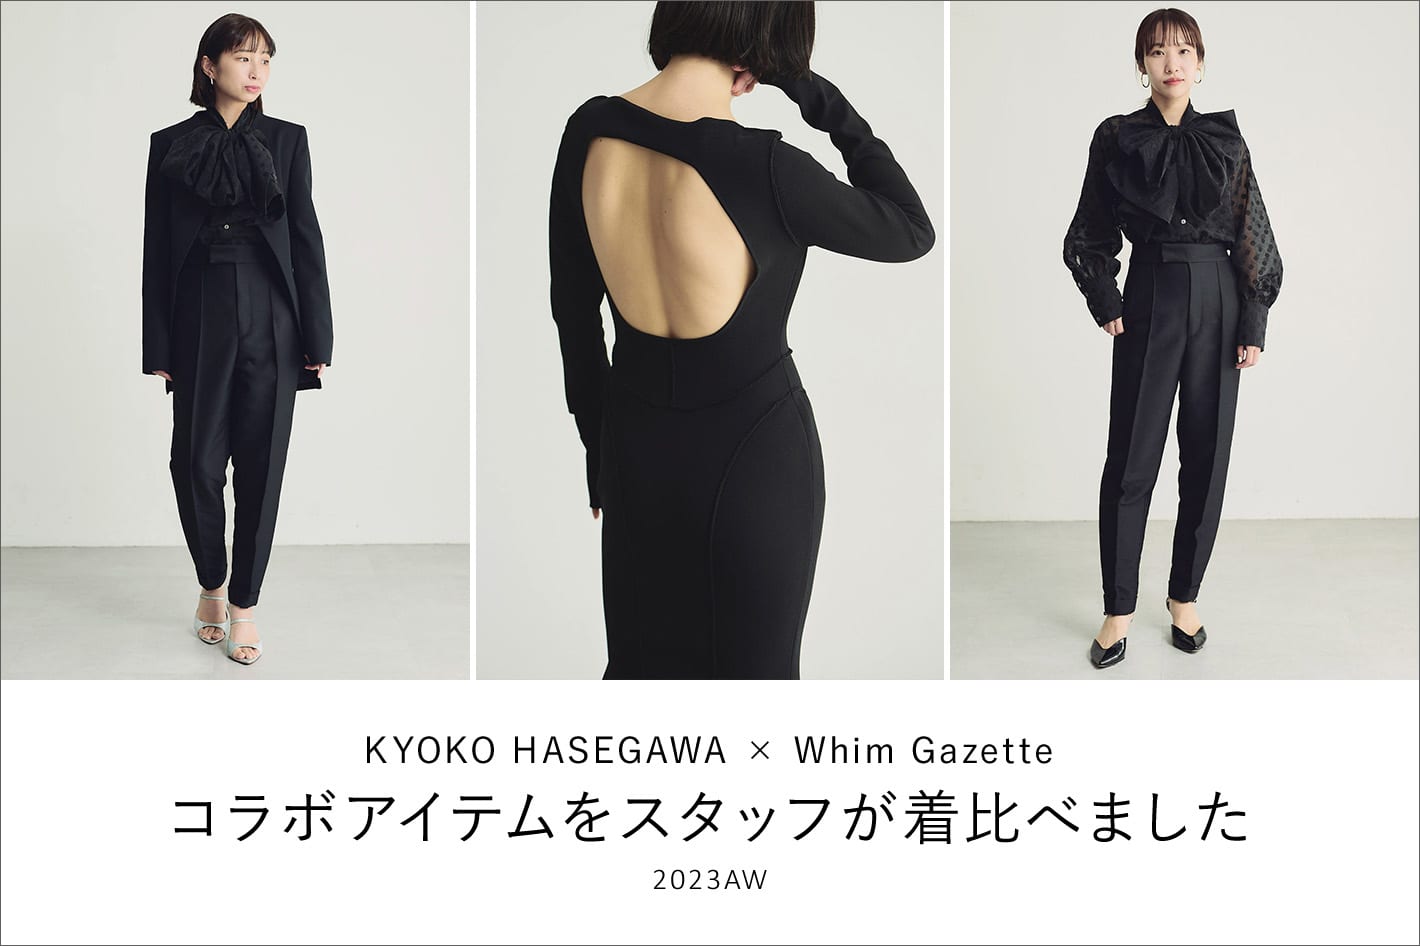 Whim Gazette サイズ別に着比べる『KYOKO HASEGAWA × Whim Gazette』コラボアイテム